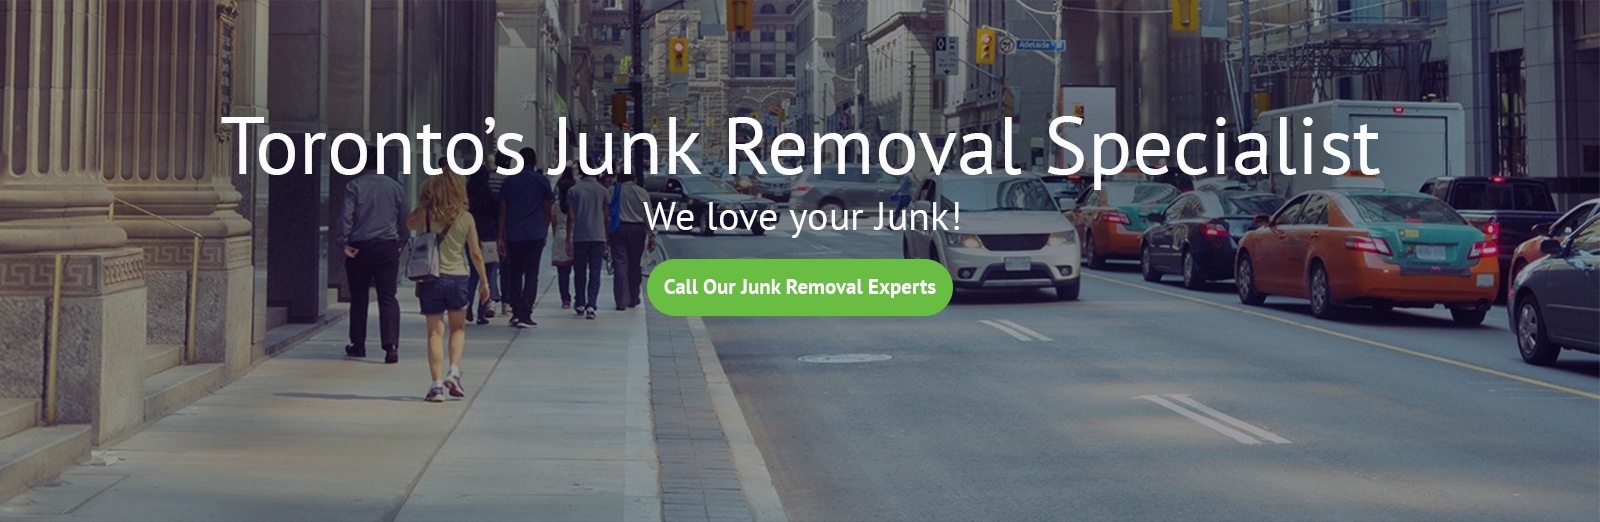 Full Service Junk Removal Company Toronto Ontario